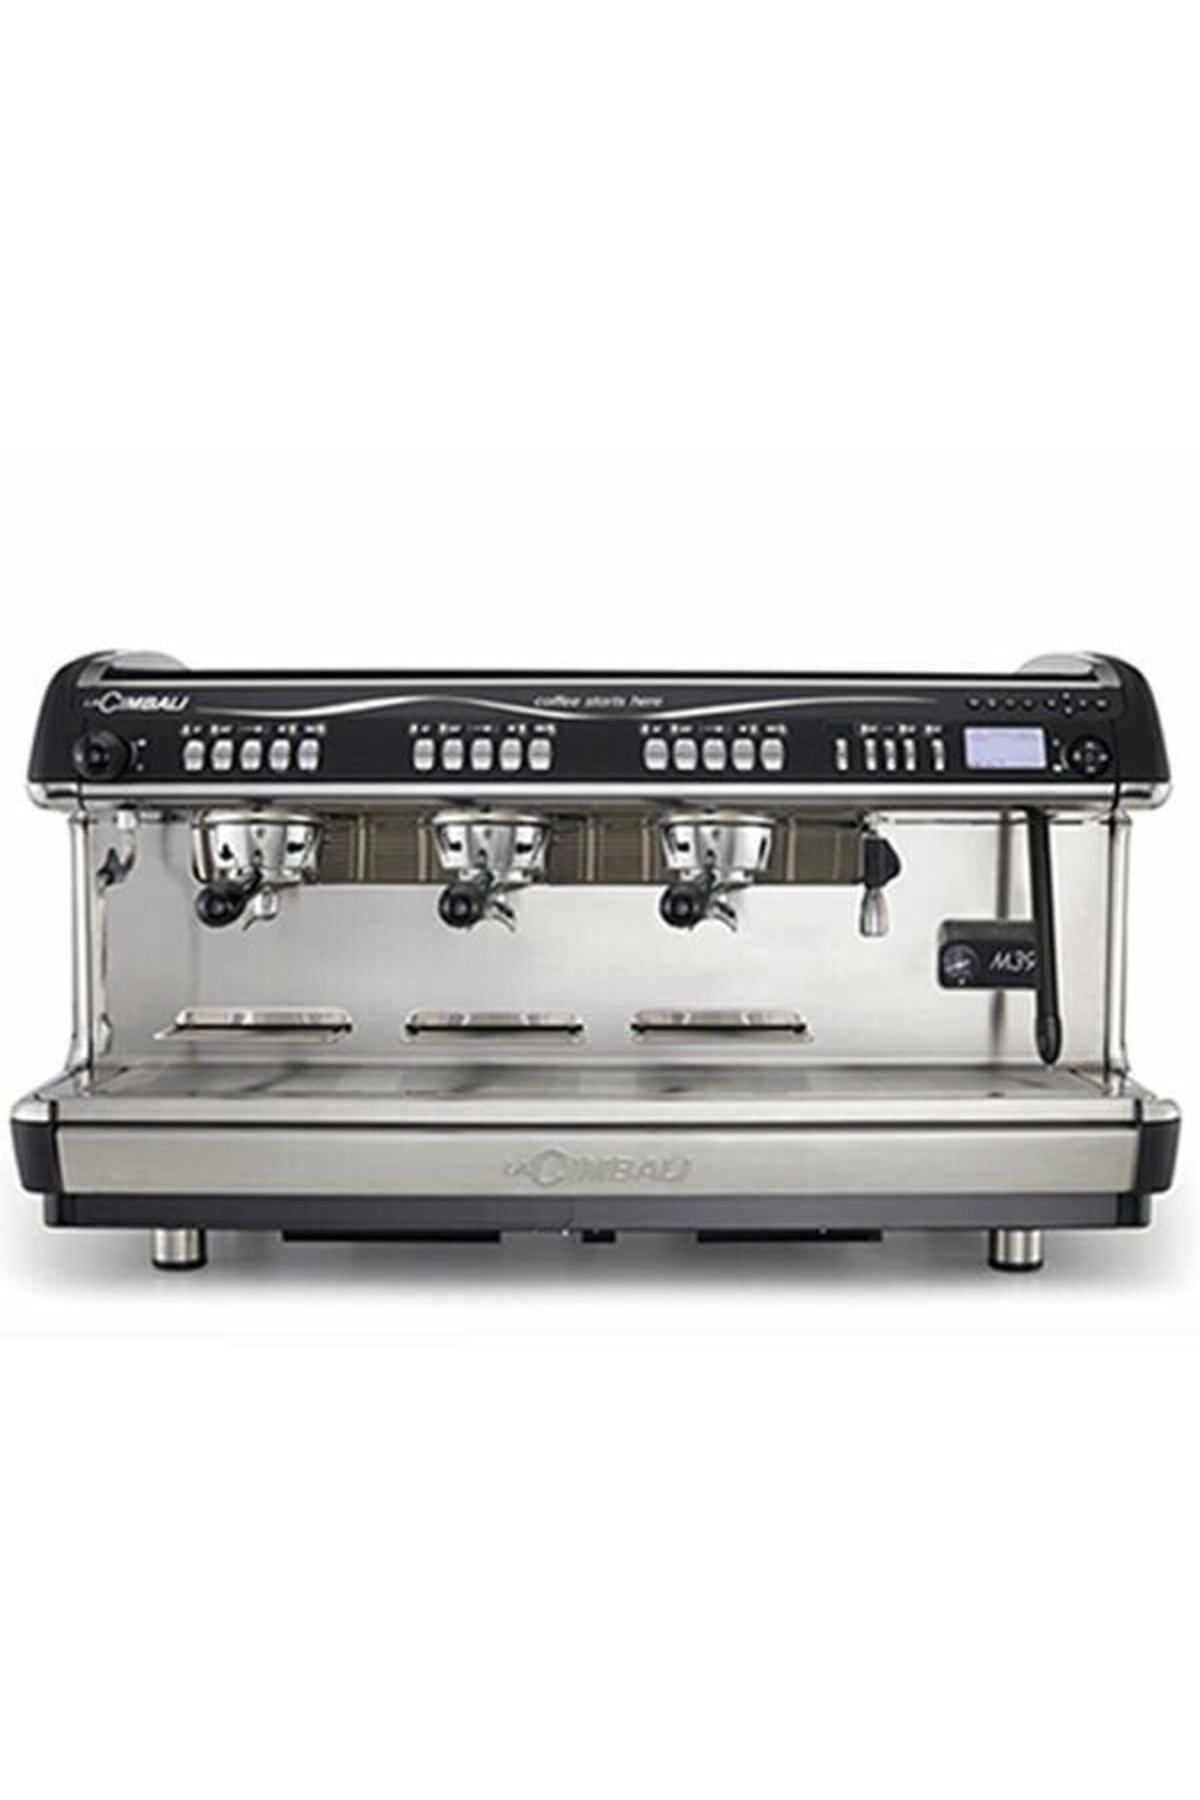 La Cimbali Üç Gruplu Tam Otomatik Espresso Kahve Makinesi